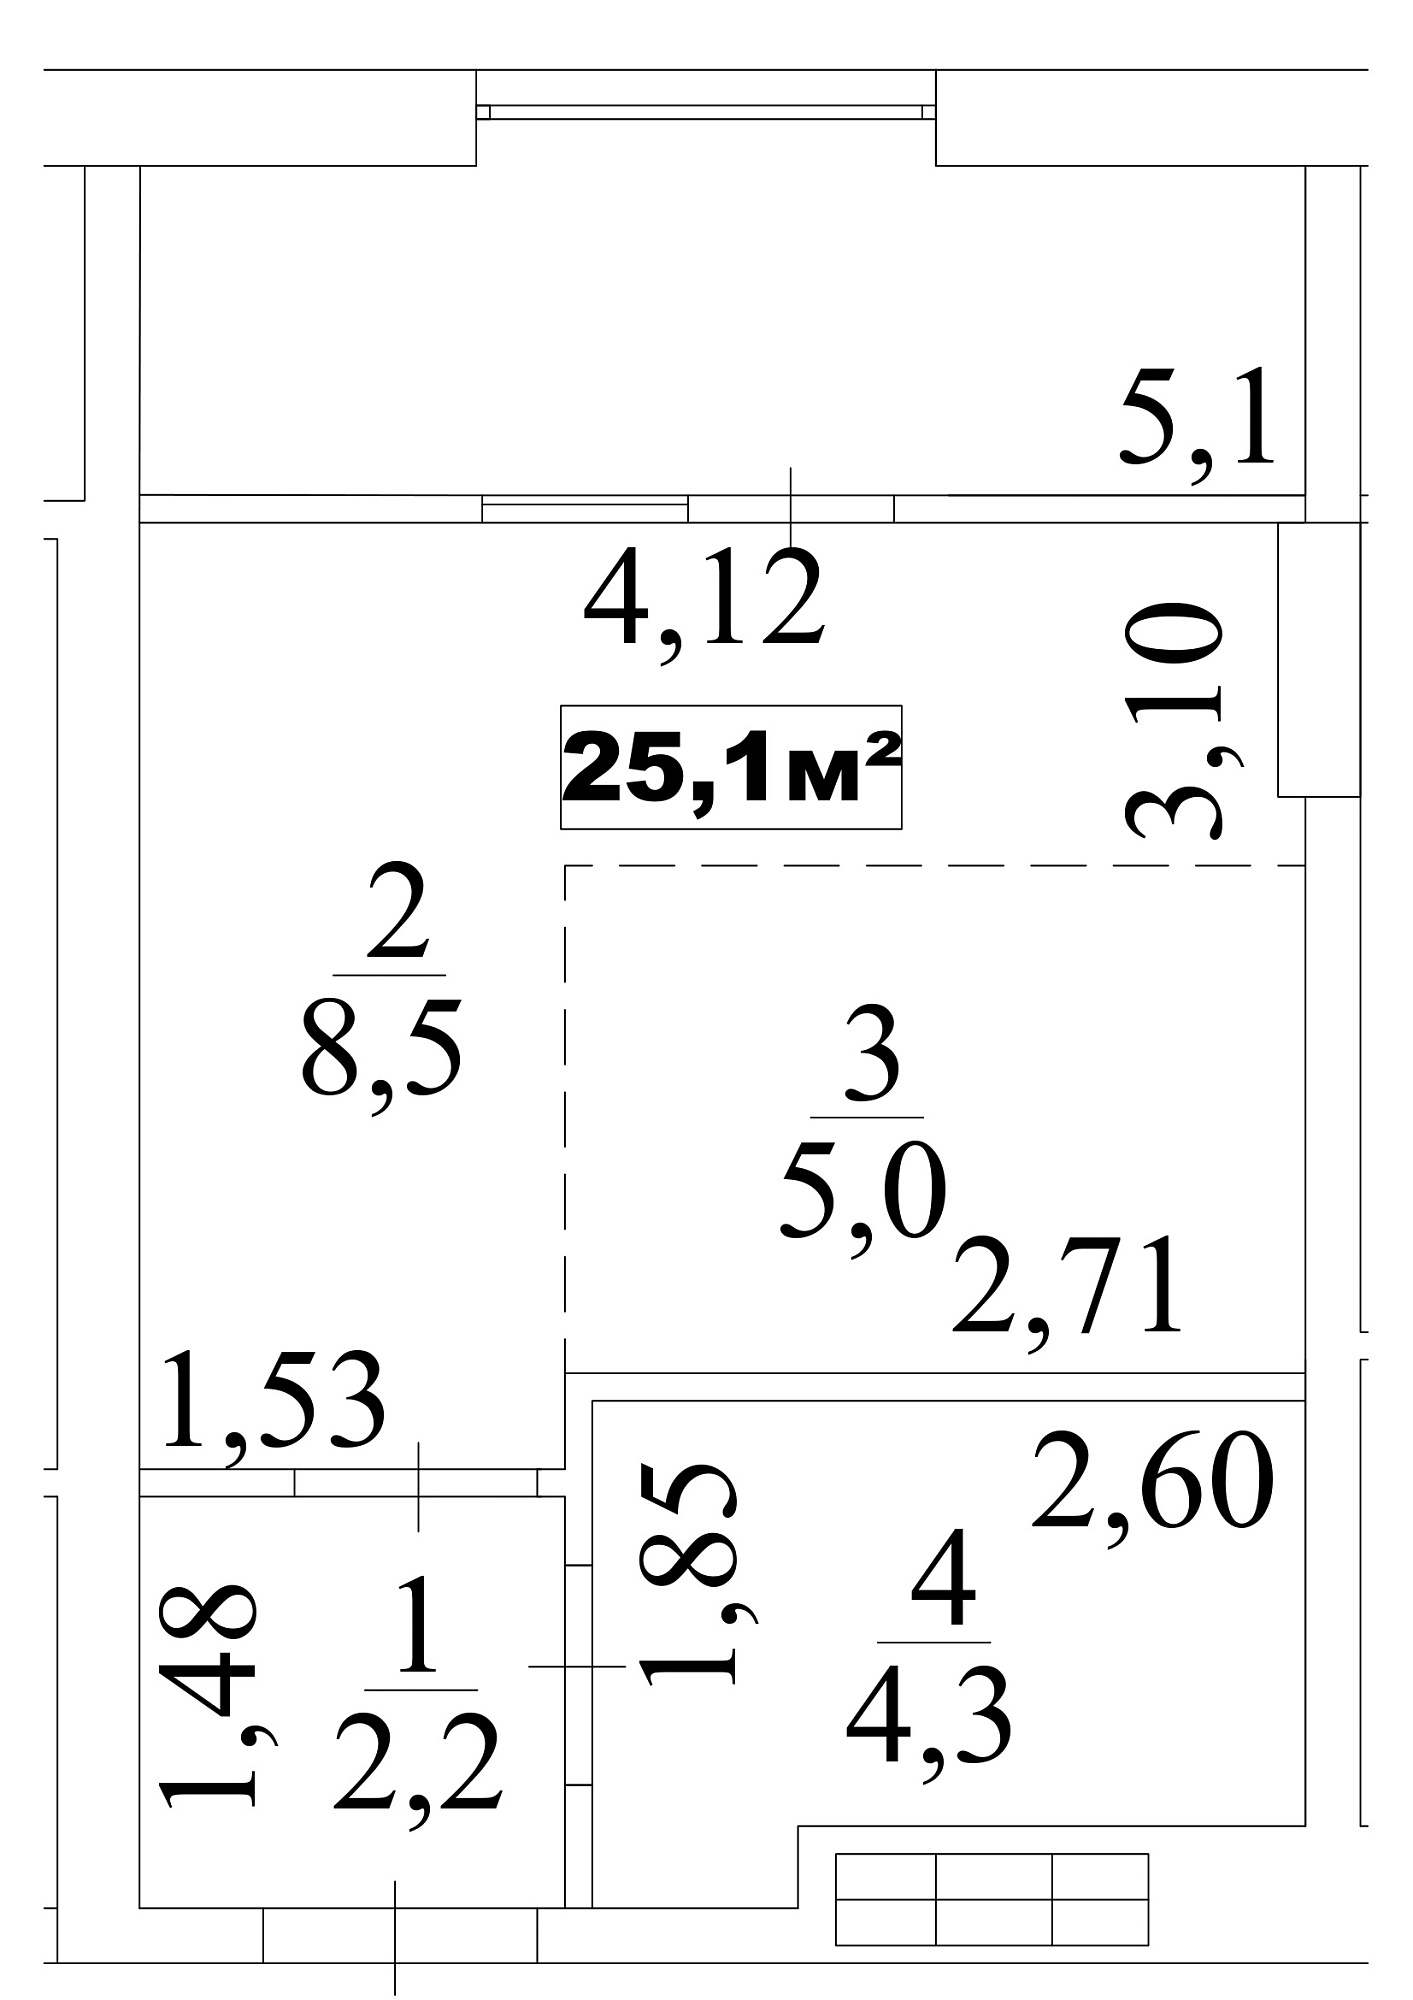 Планировка Smart-квартира площей 25.1м2, AB-10-09/0075в.